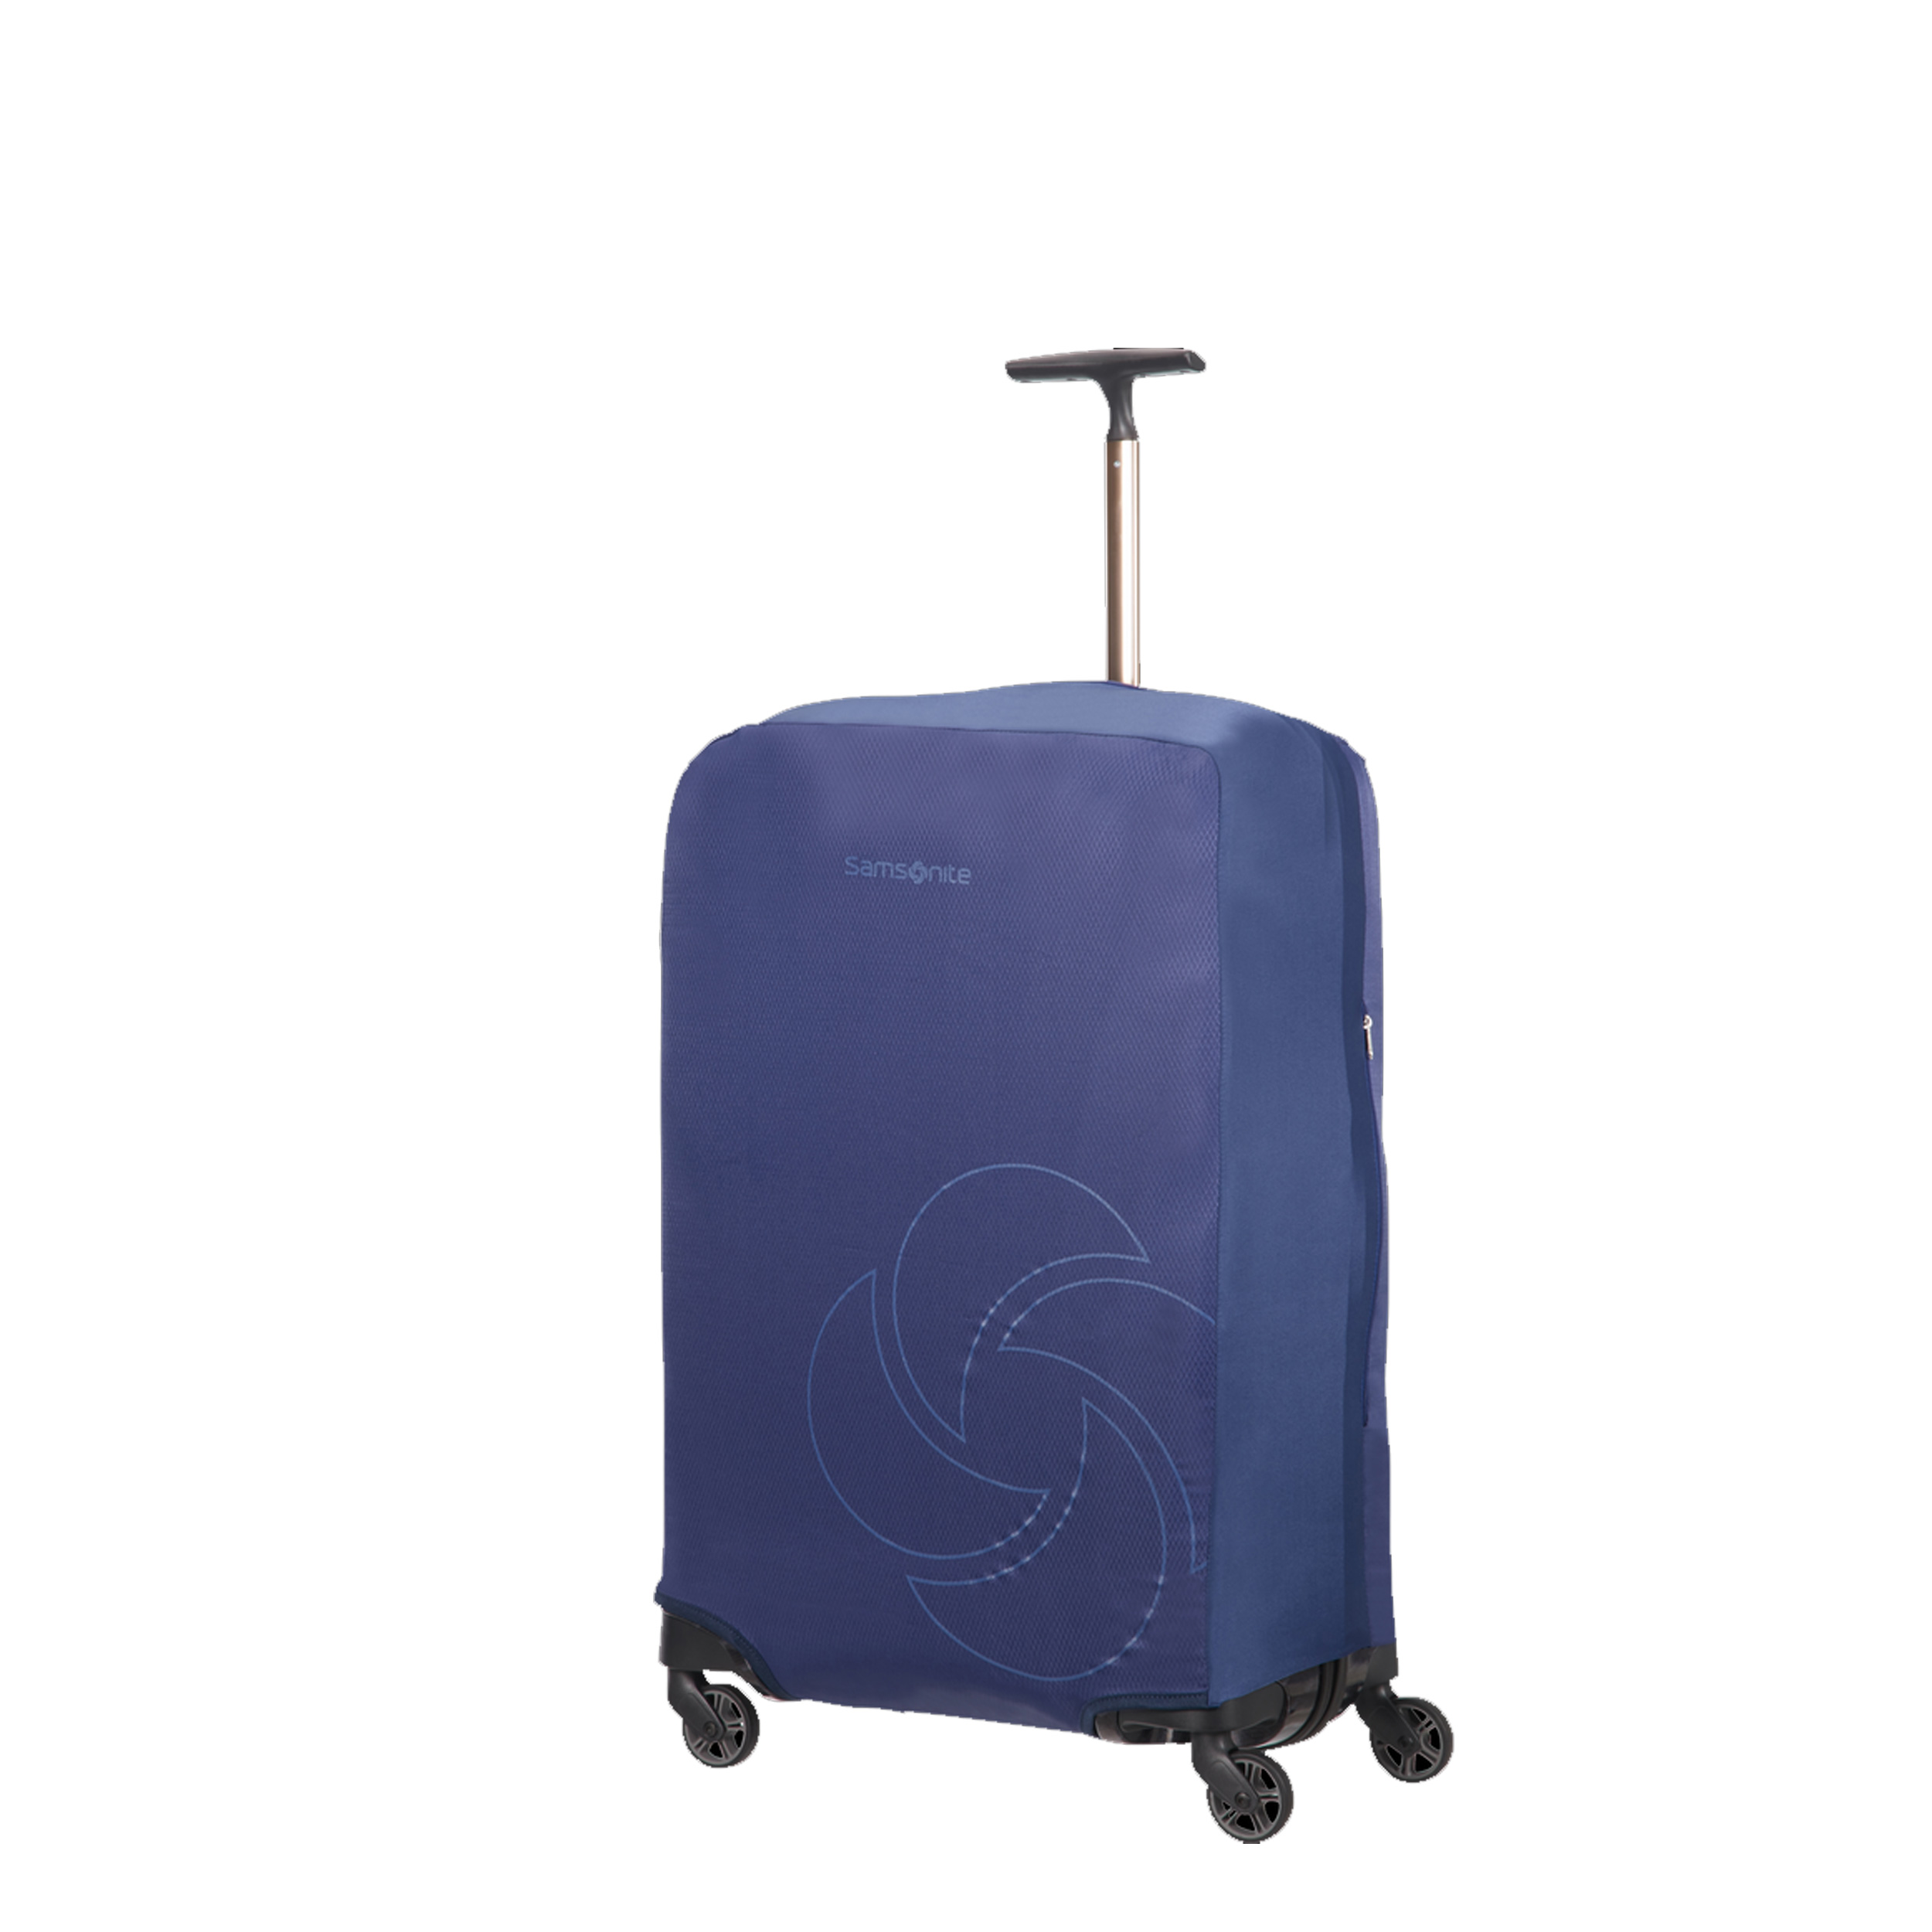 housse valise samsonite taille 65cm bleu marine